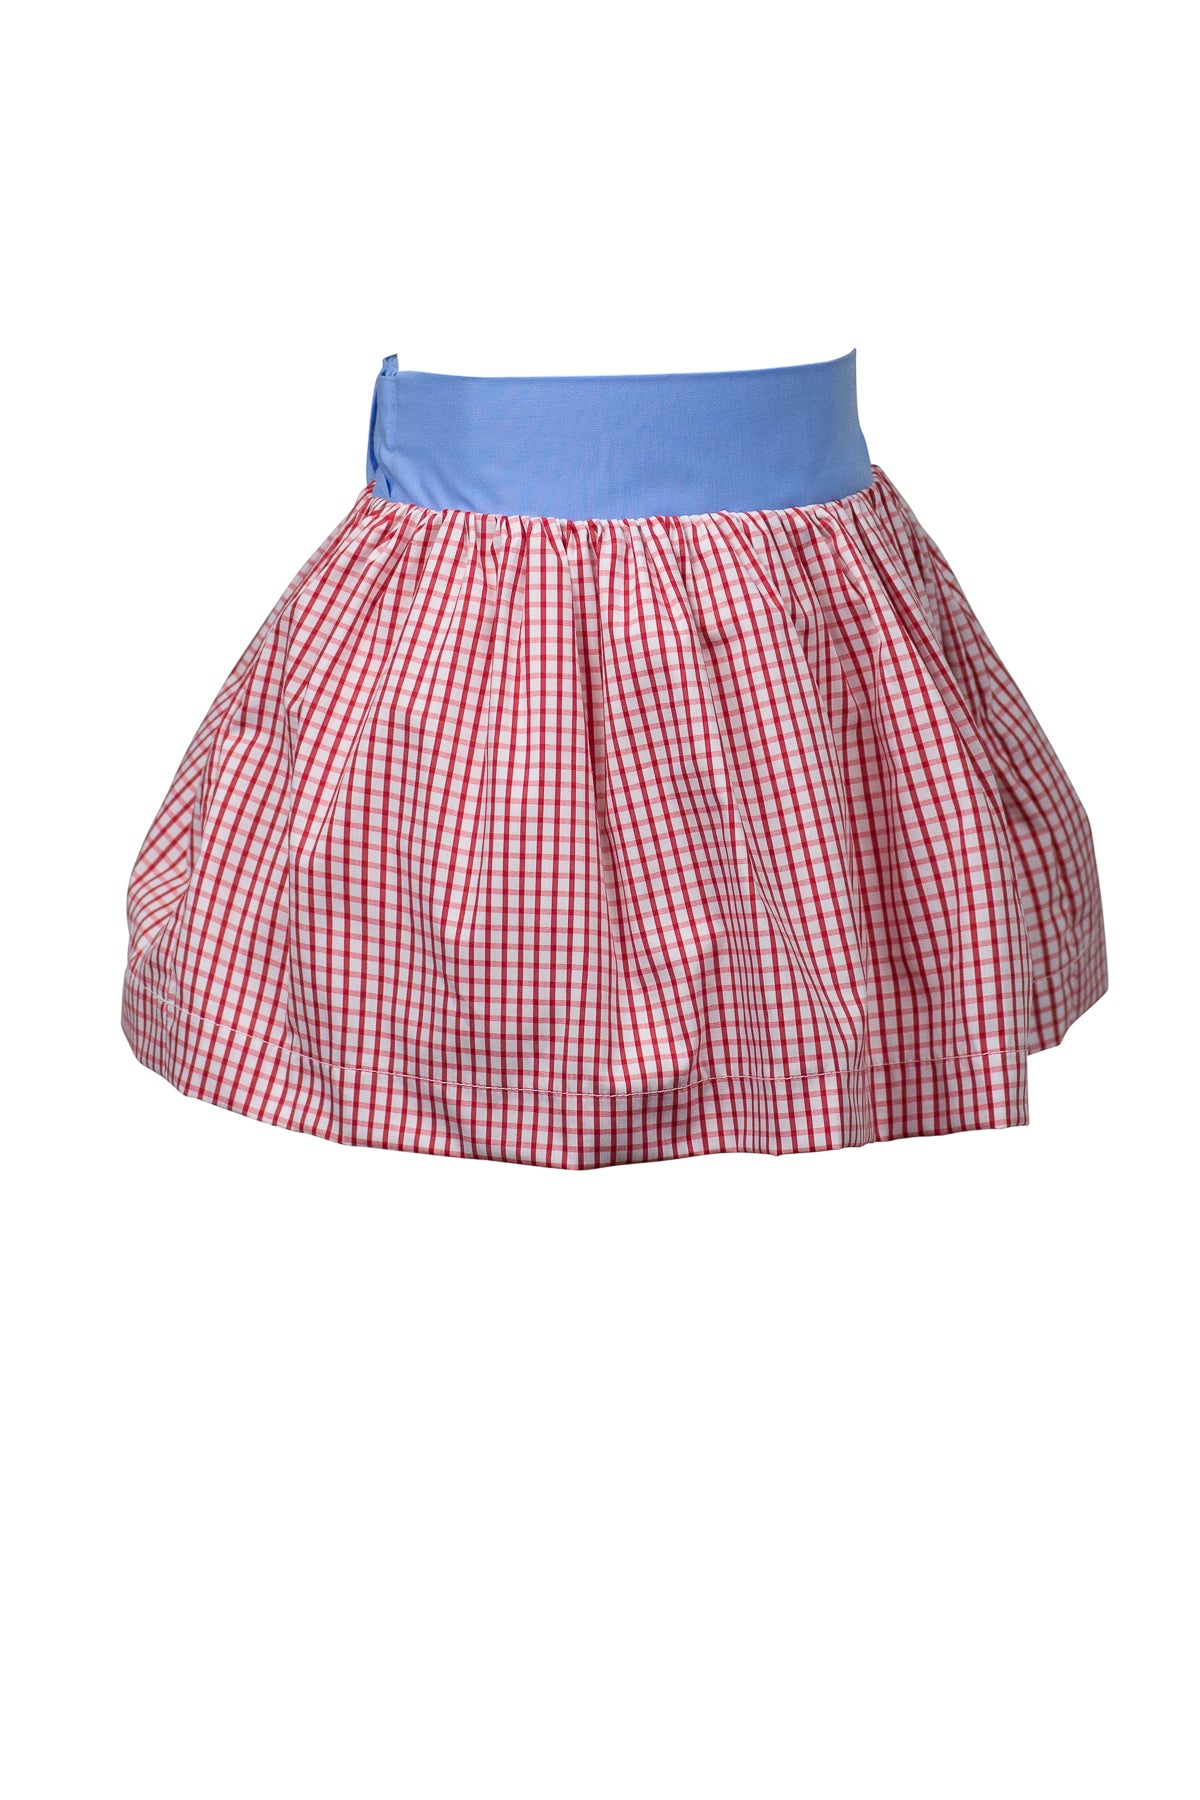 Skylar School Skirt